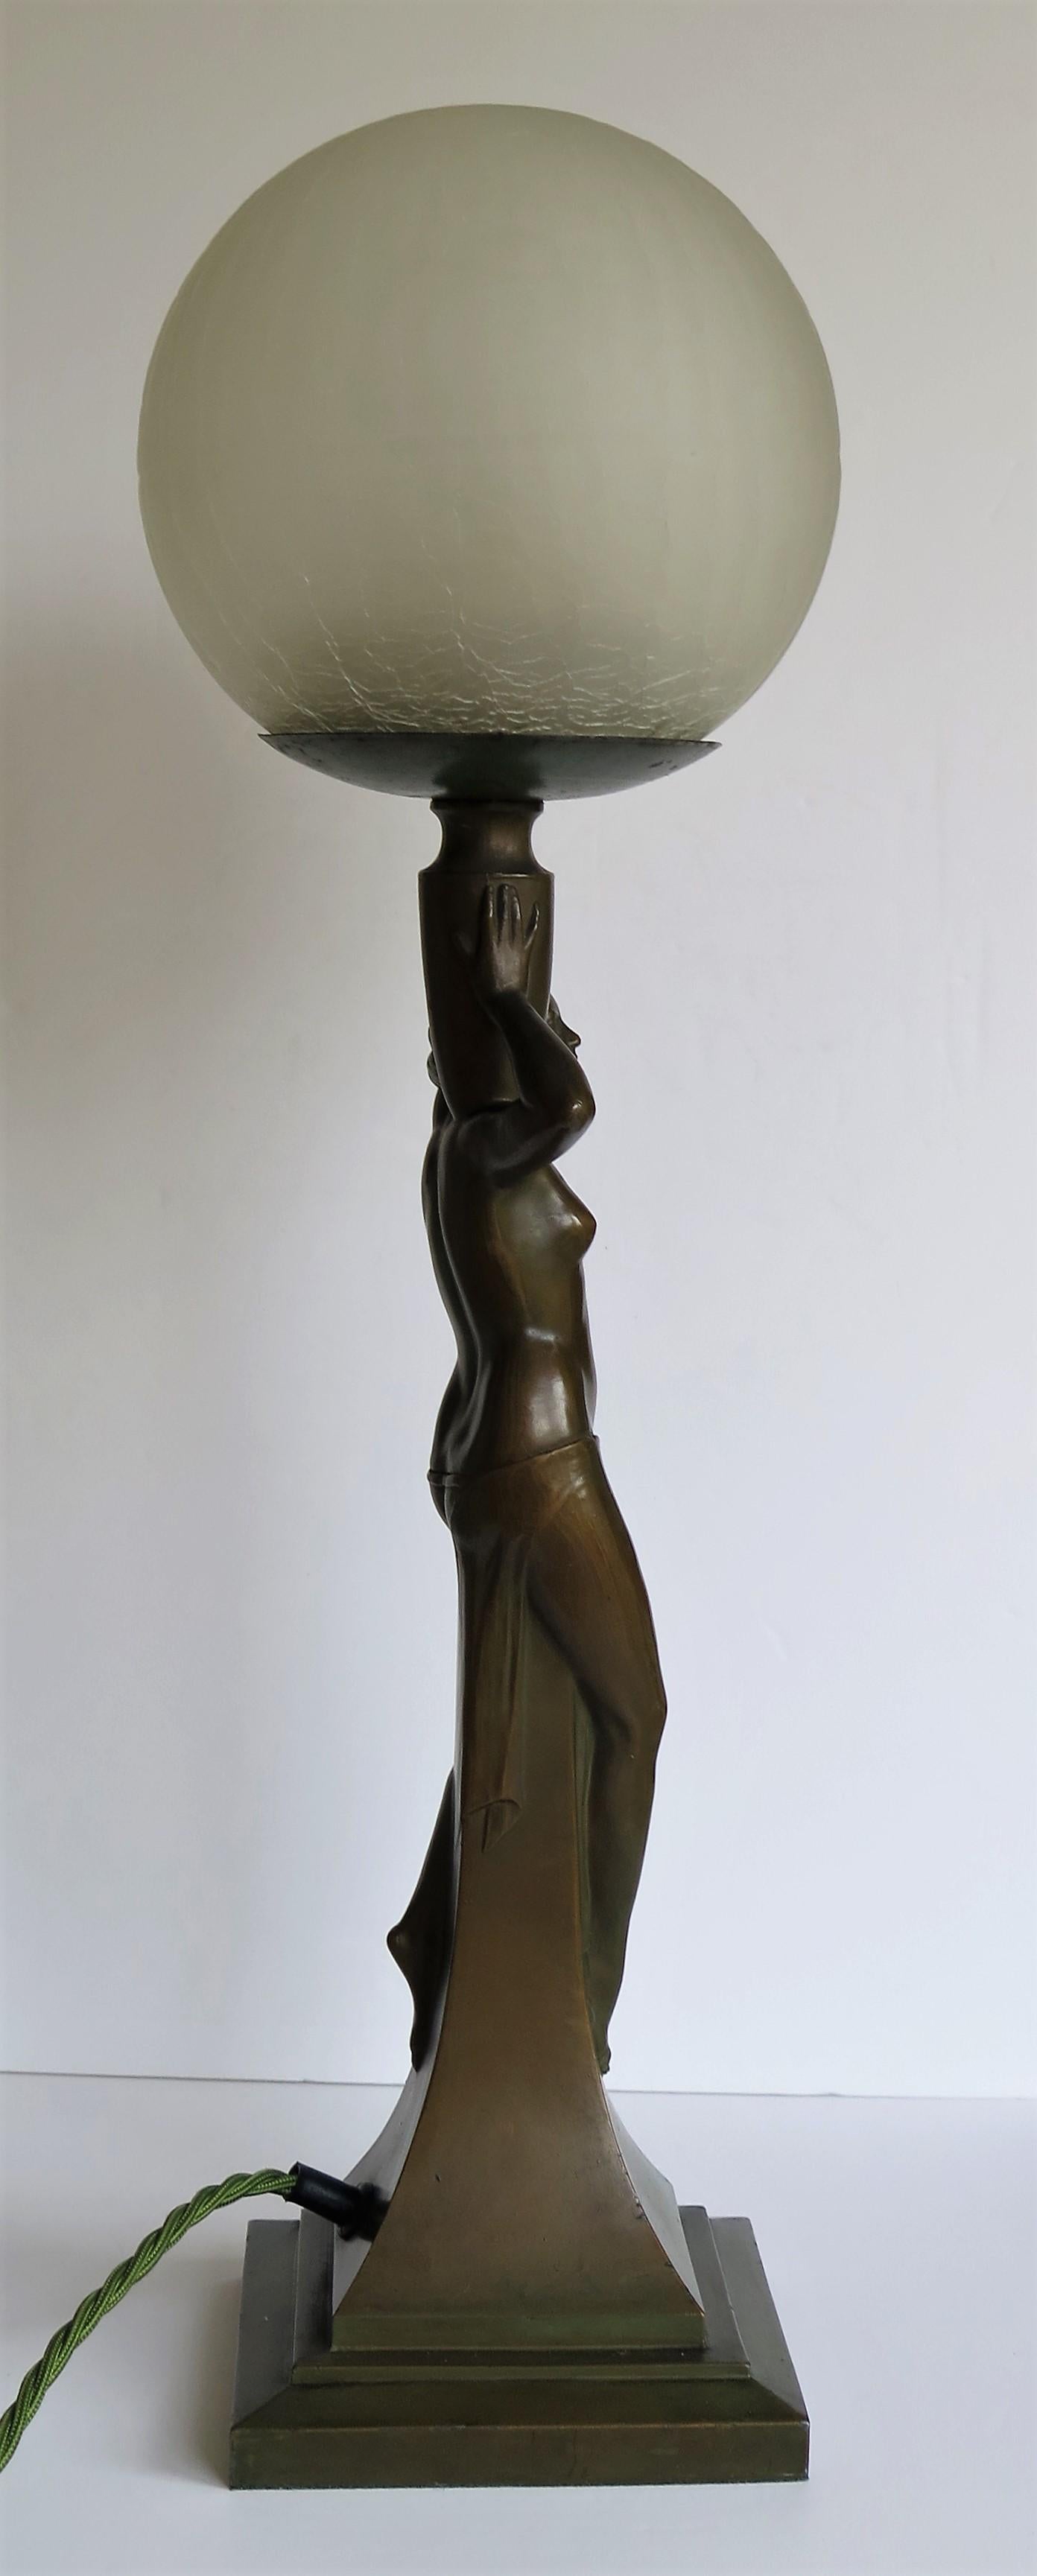 art deco figurine lamps